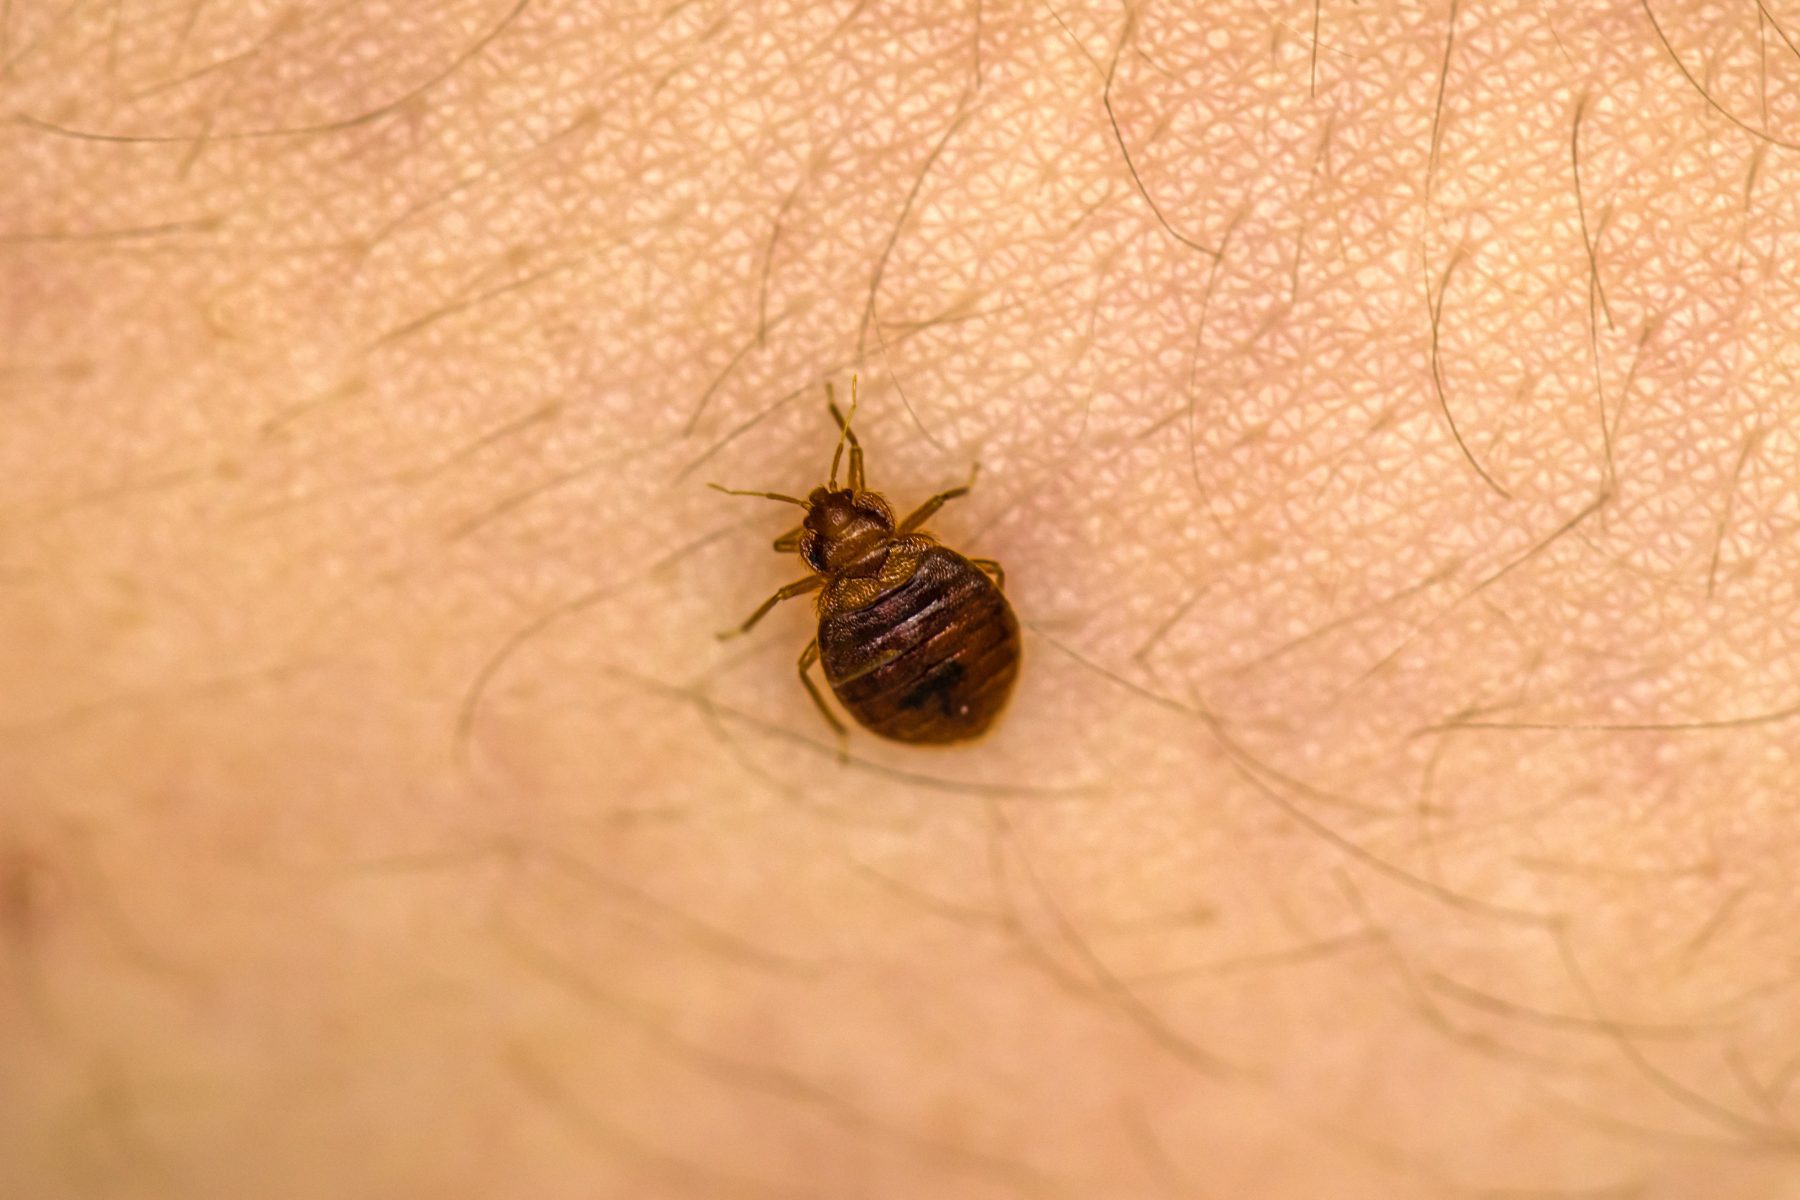 Bed bug up close on skin.